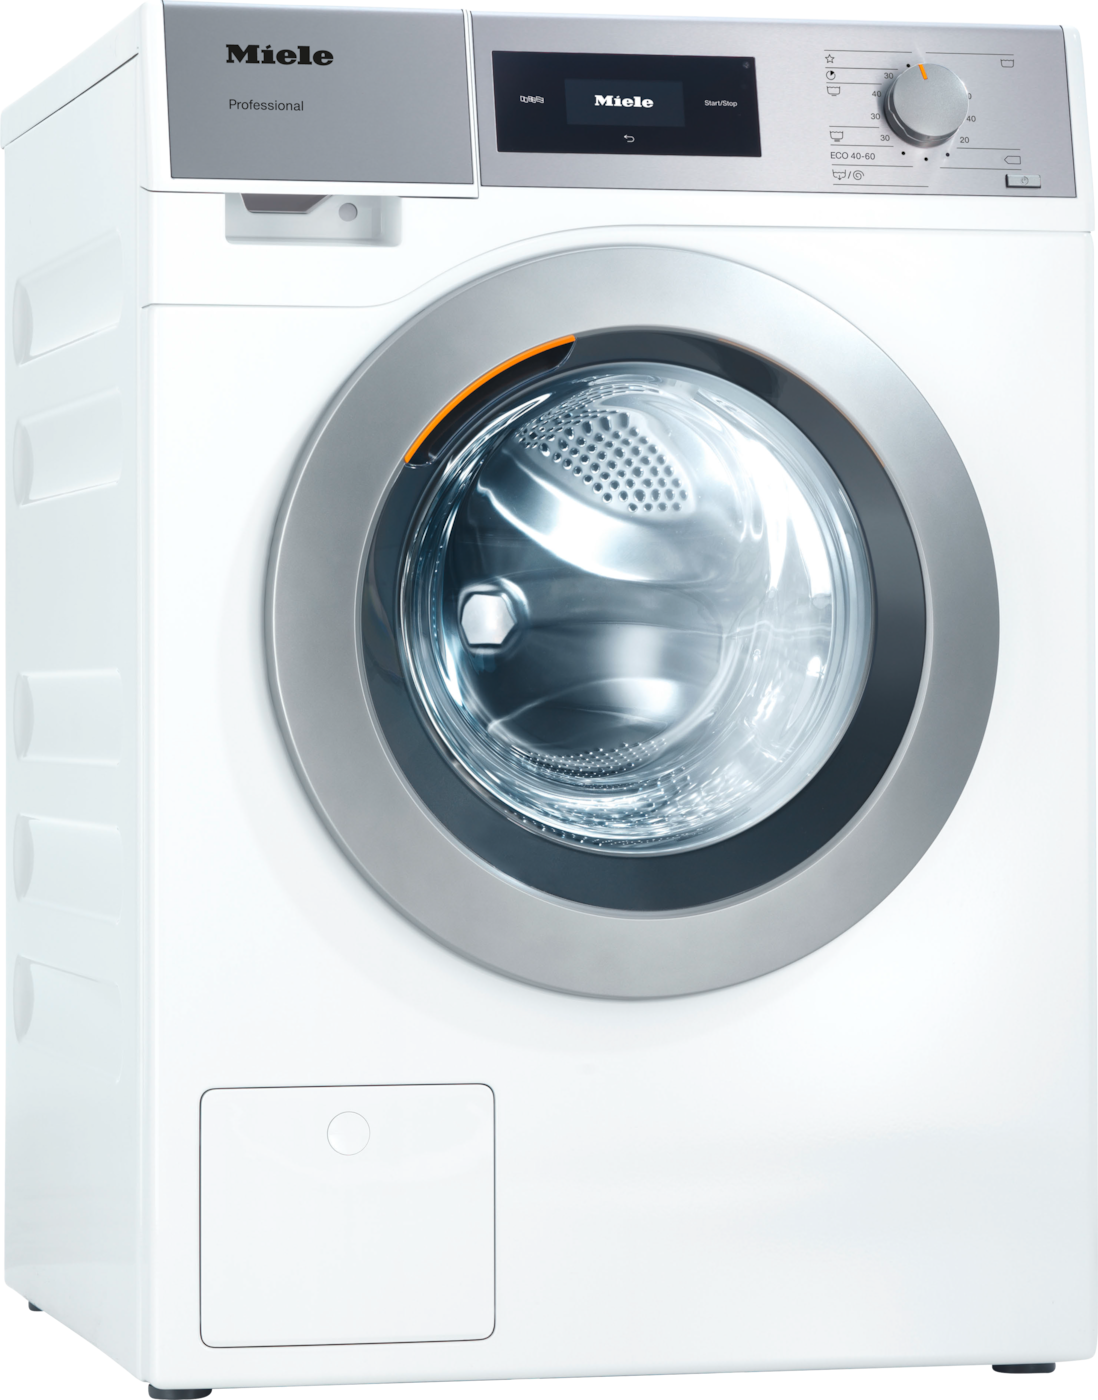 PWM 507 [EL DP MAR 1N AC 230 V 60Hz] - Professional washing machine, Little Giants, electric heating, drain pump 